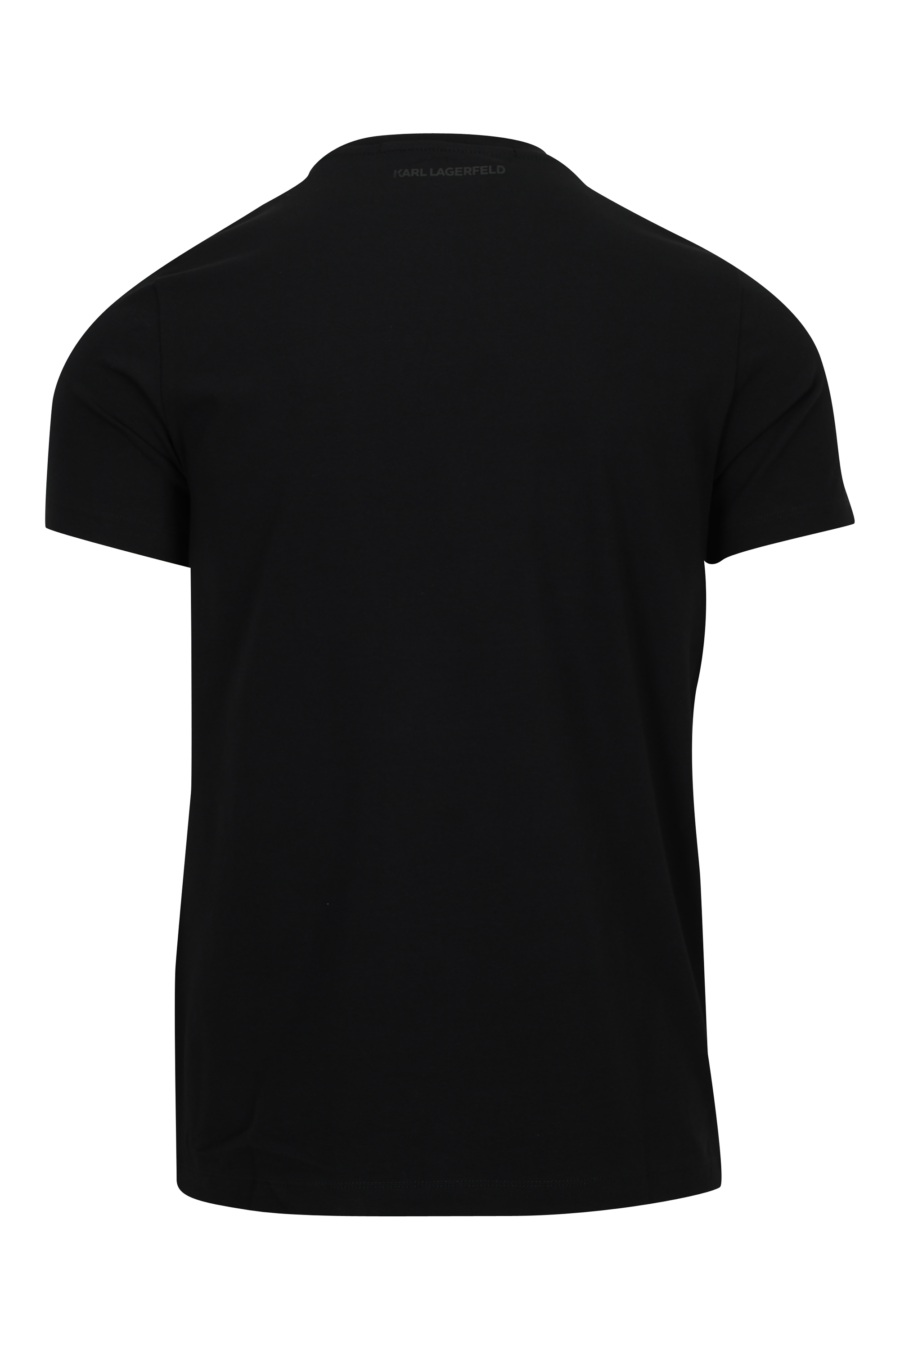 Camiseta negra con minilogo negro en goma - 4062225534339 1